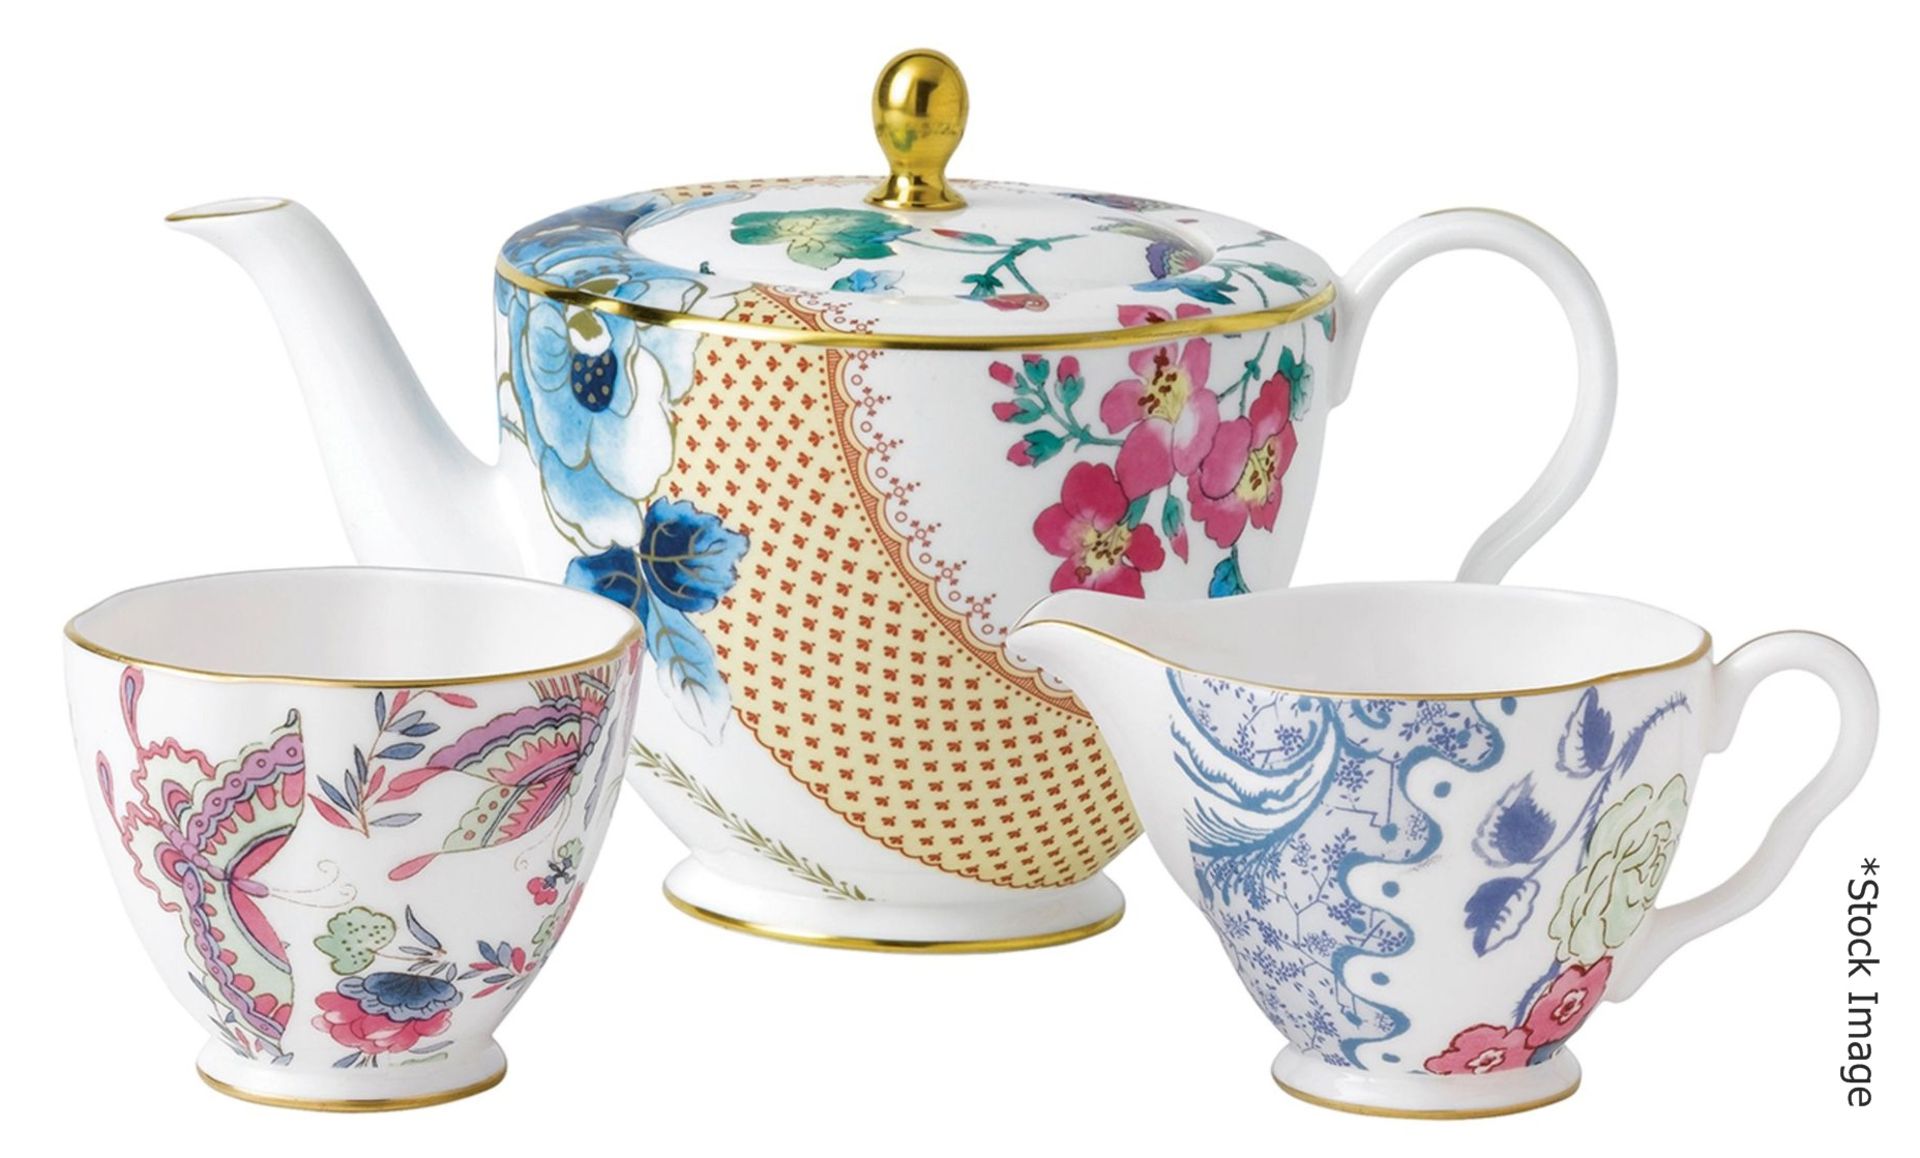 1 x WEDGWOOD 'Butterfly Bloom' Fine Bone China Teapot, Creamer And Sugar Bowl Set - RRP £195.00